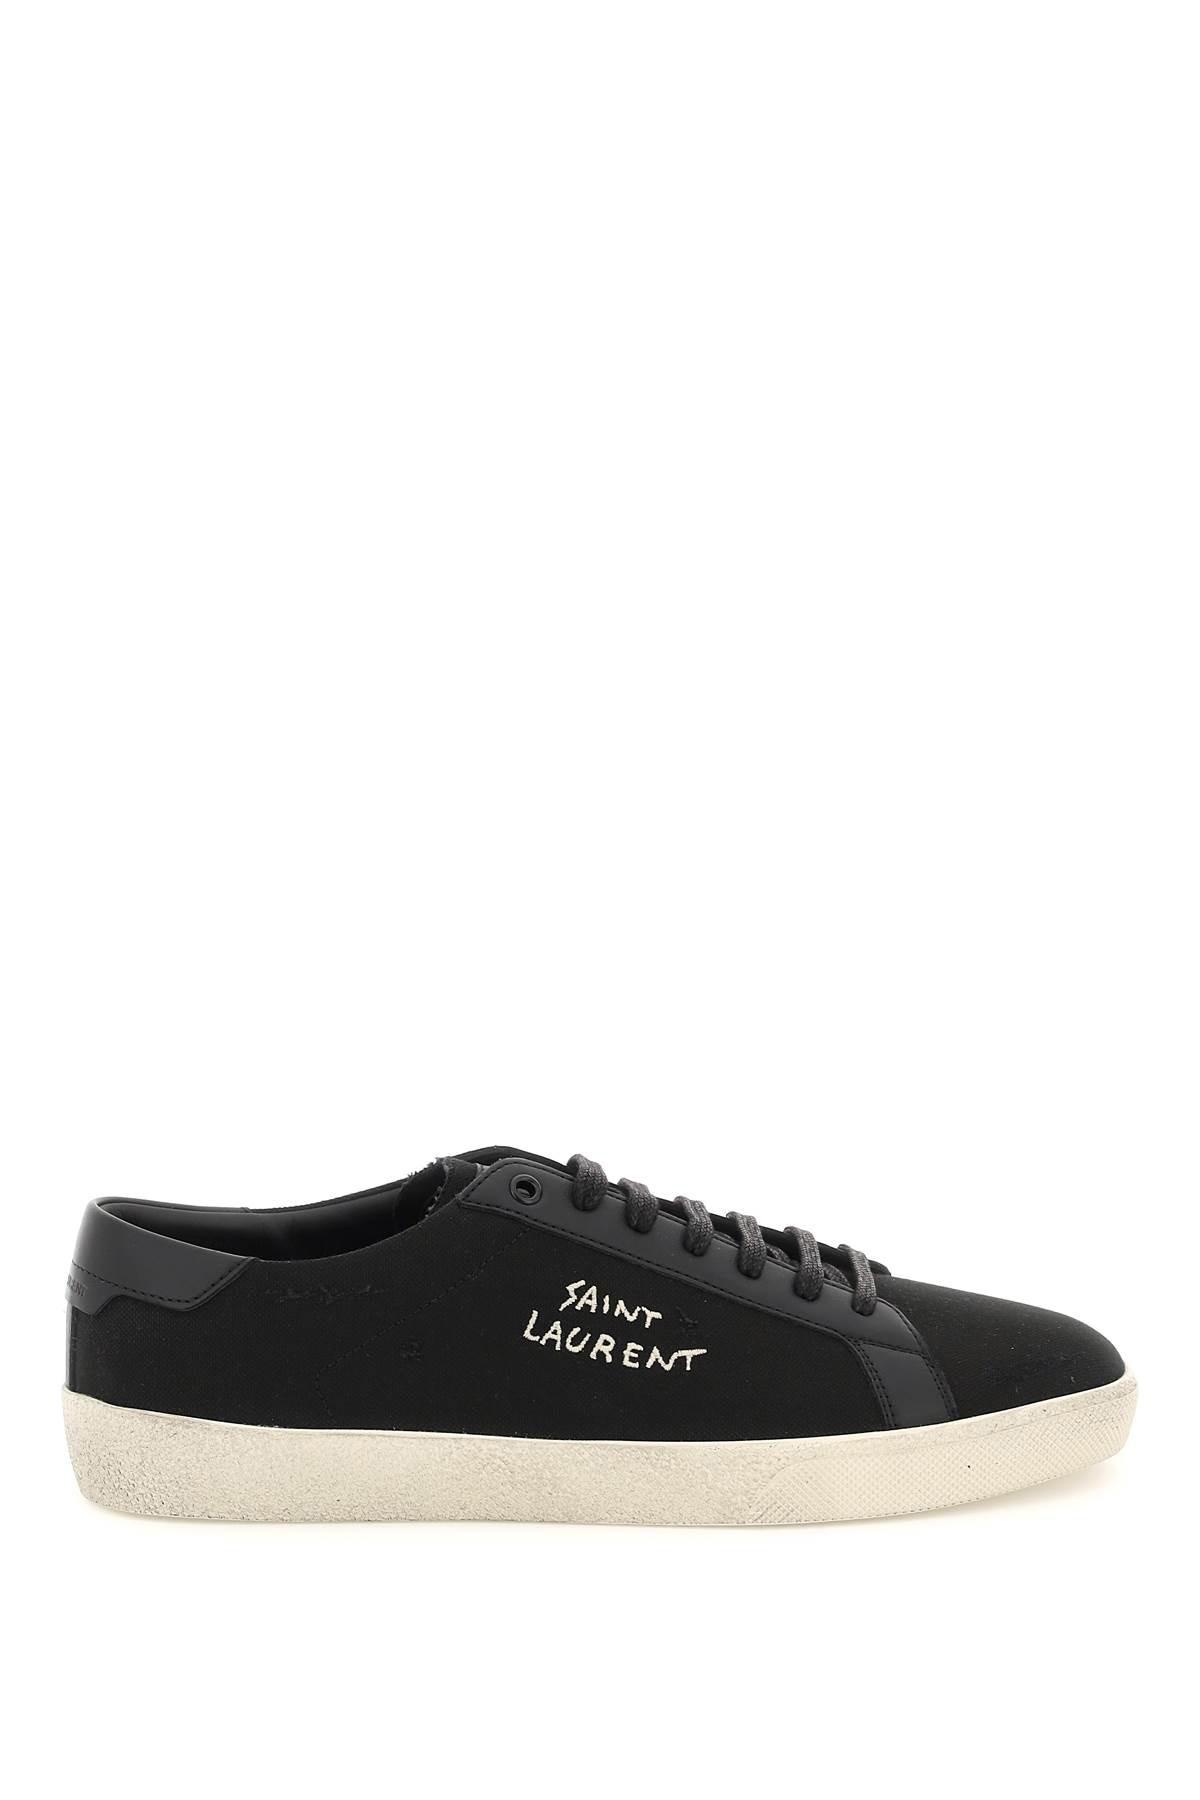 Saint Laurent Sl06 Canvas Sneakers in Black for Men | Lyst